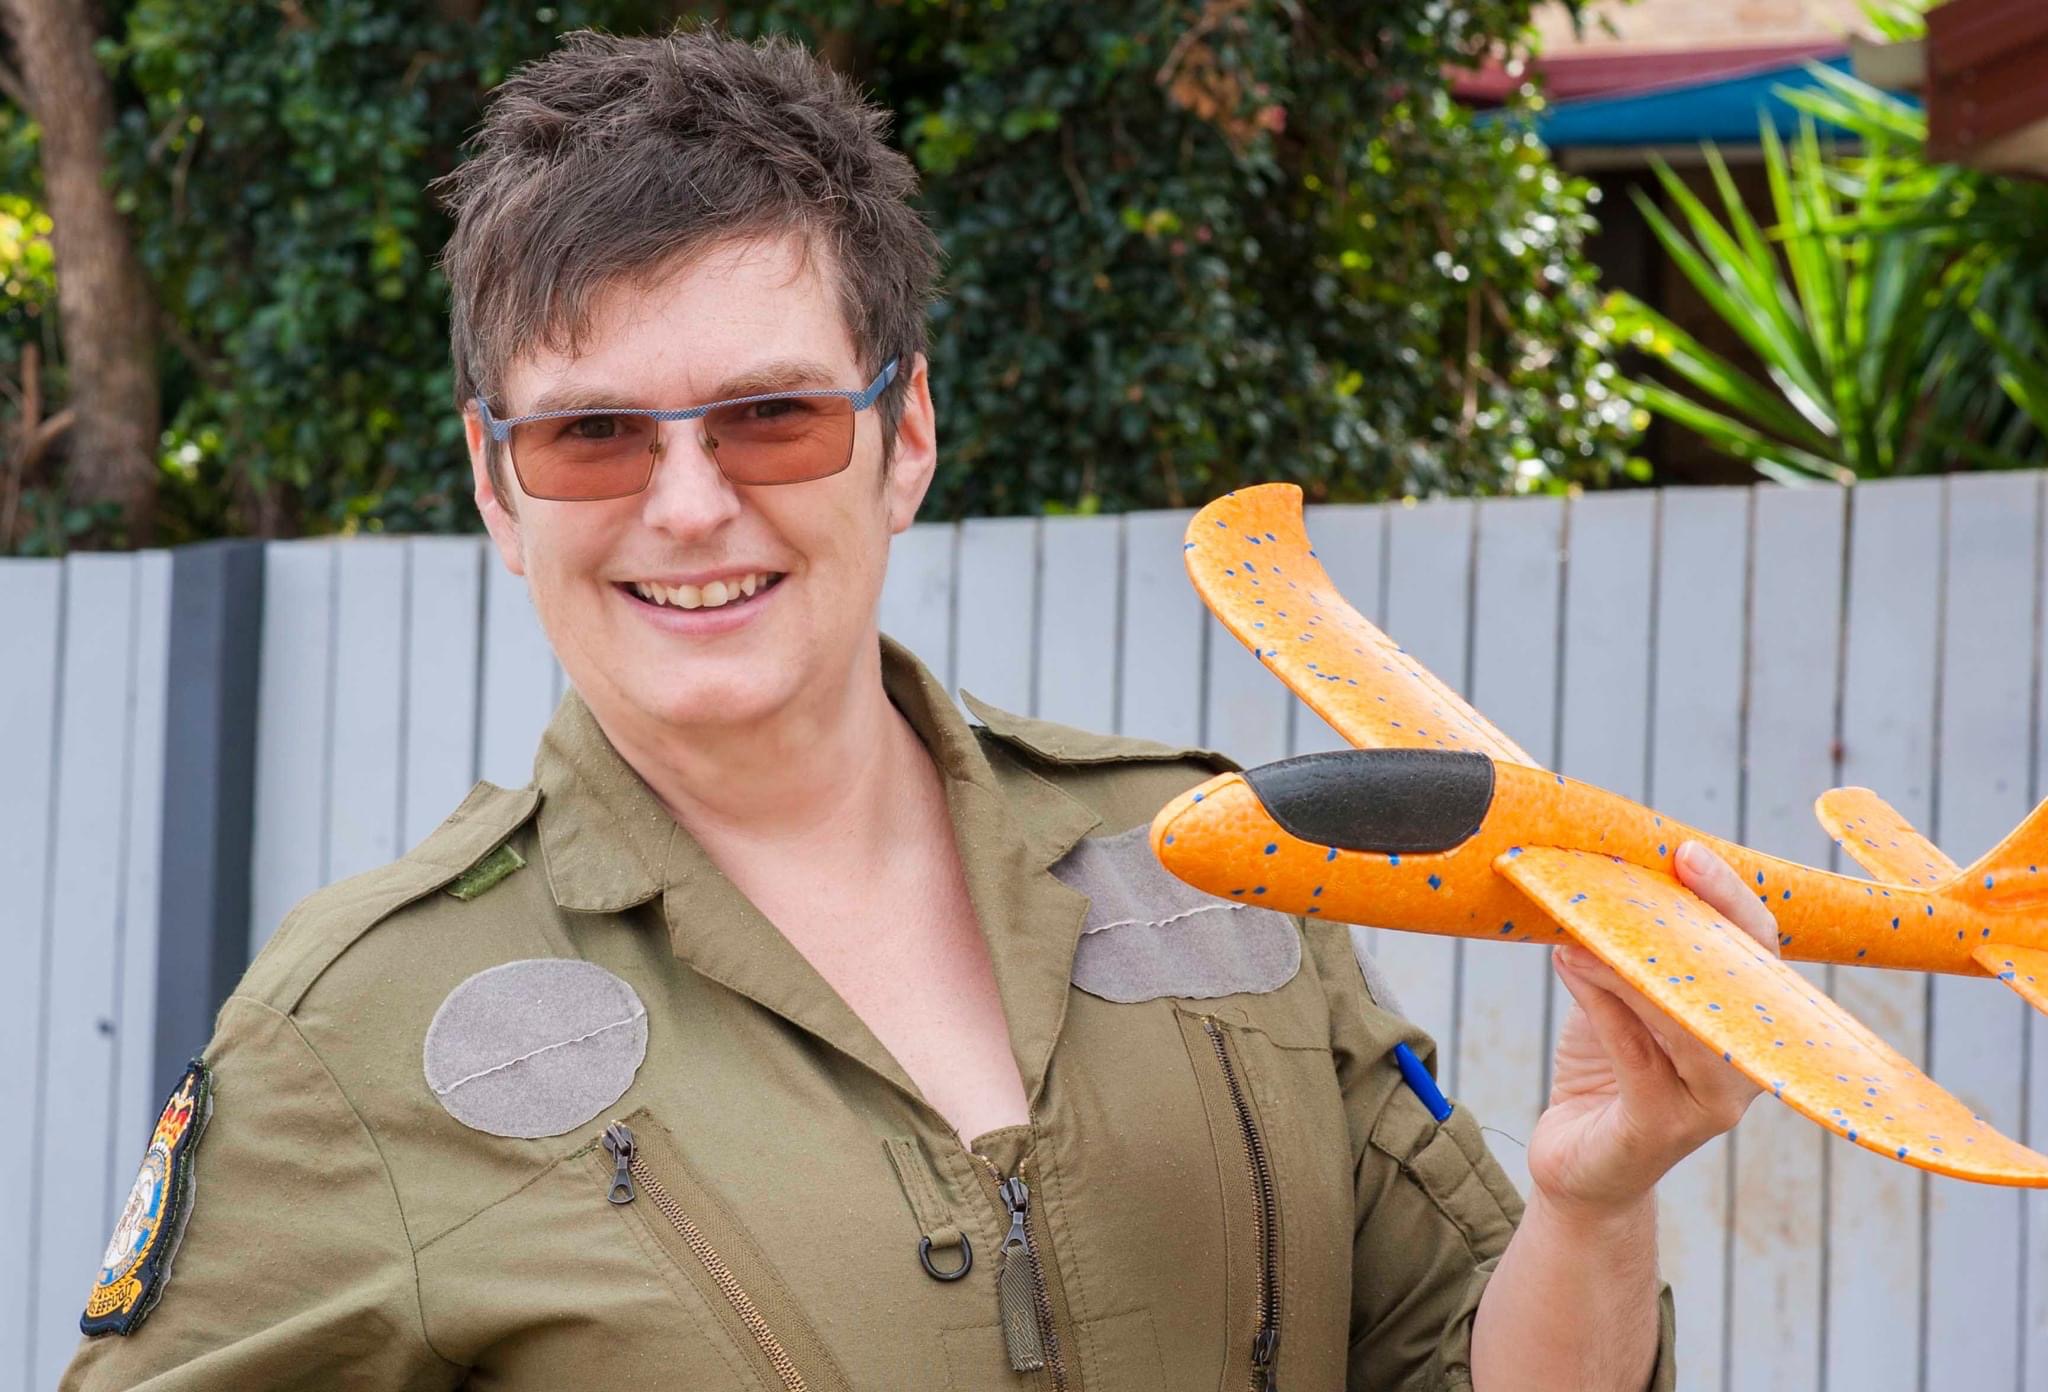 Ruth holding model plane